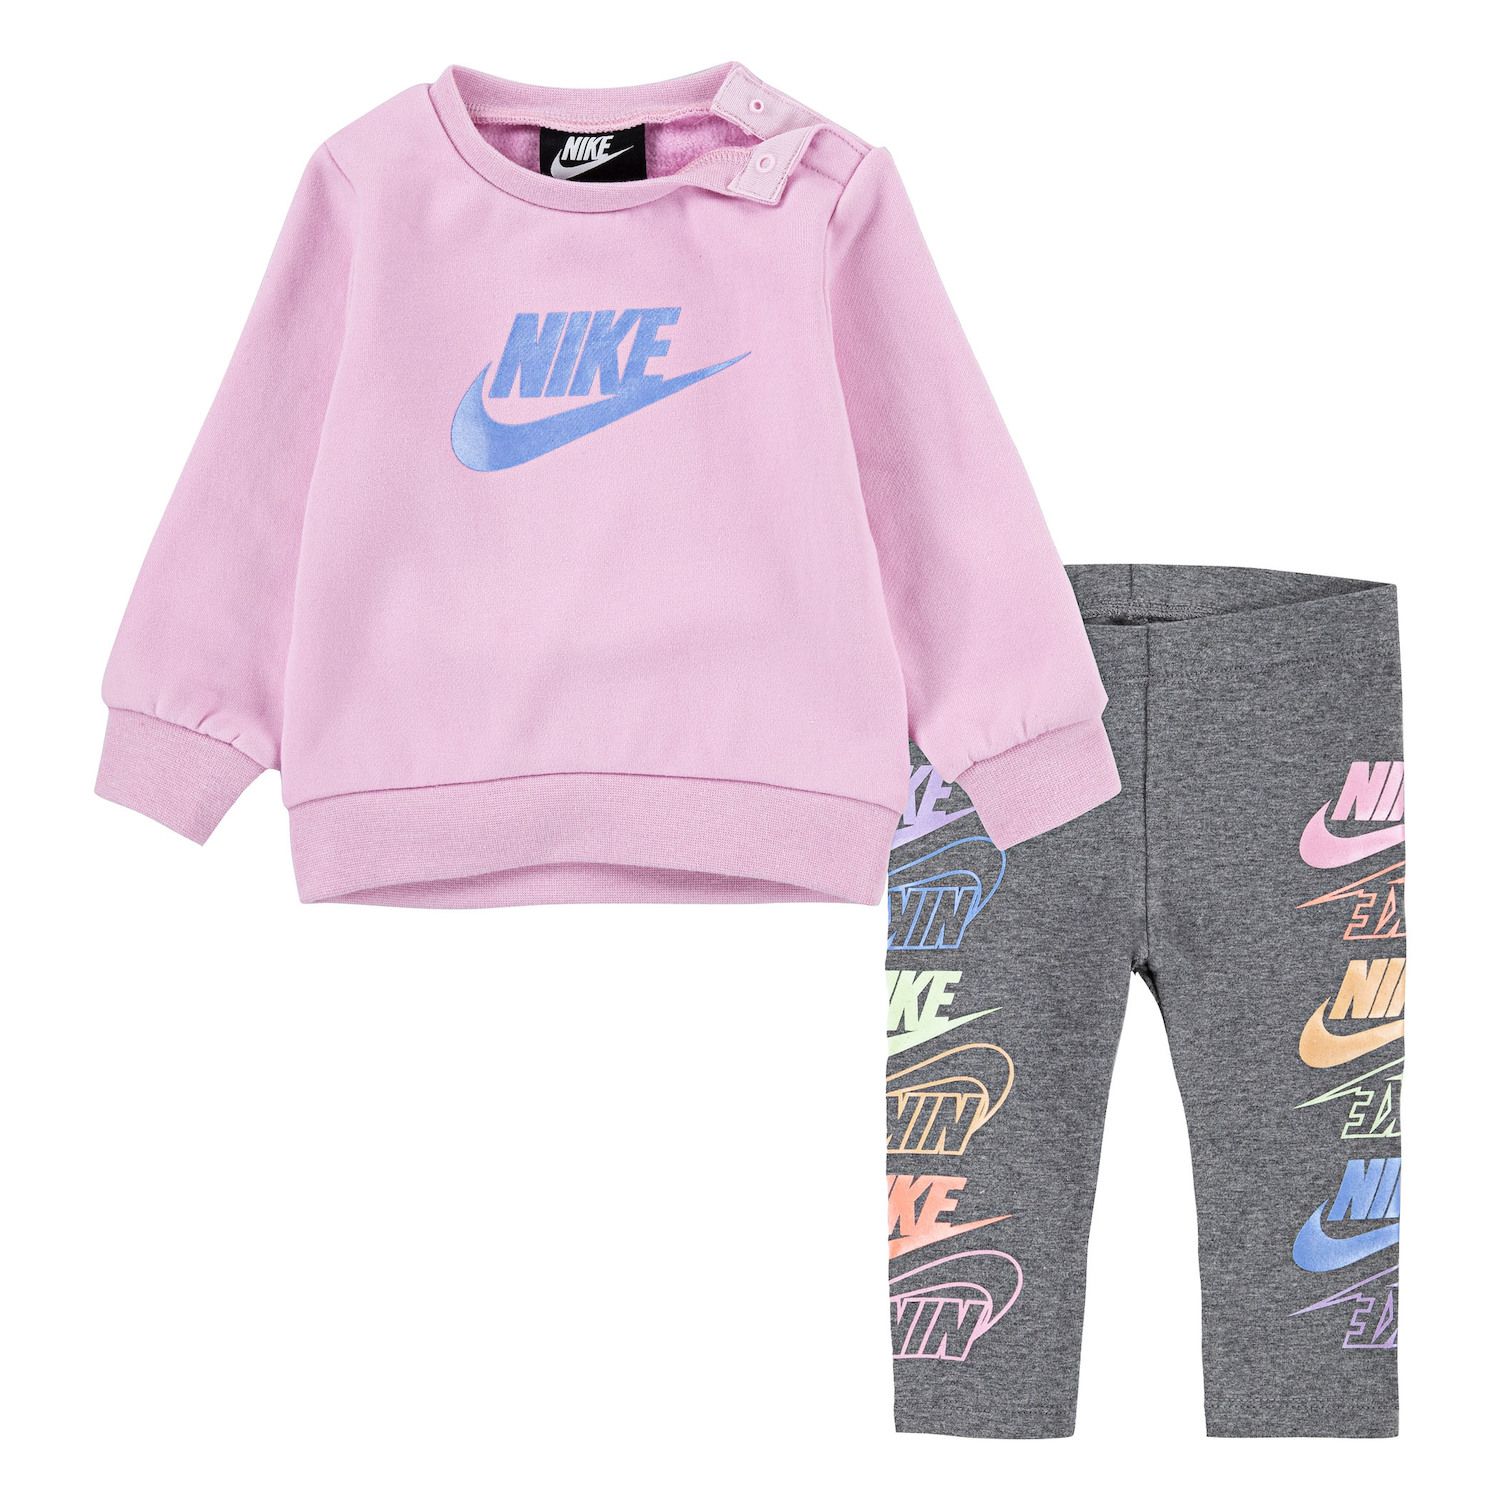 18-24 Months Girls Nike Baby Clothing 